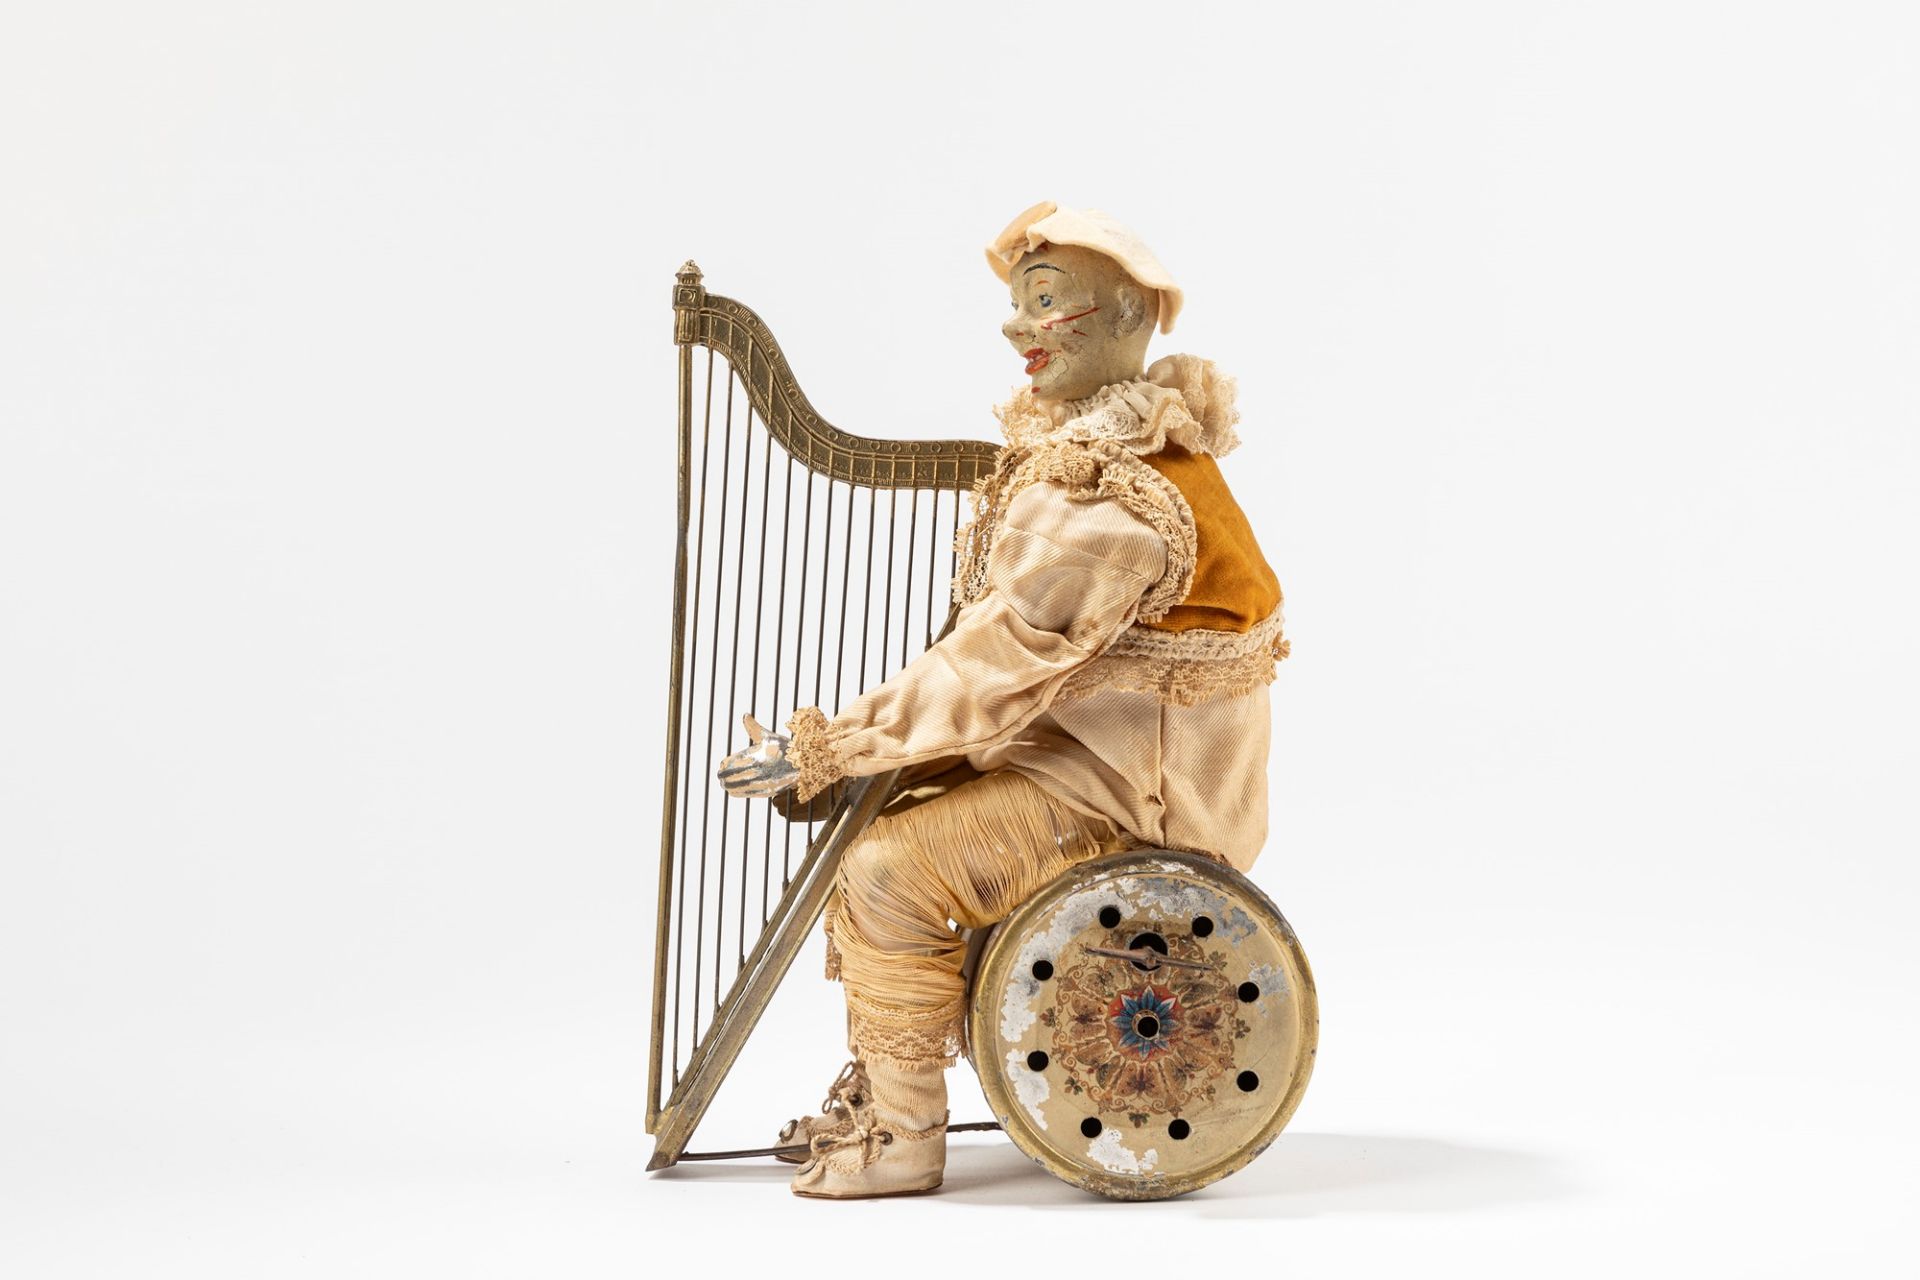 Gunthermann - Clown playing the harp, 1900-1910